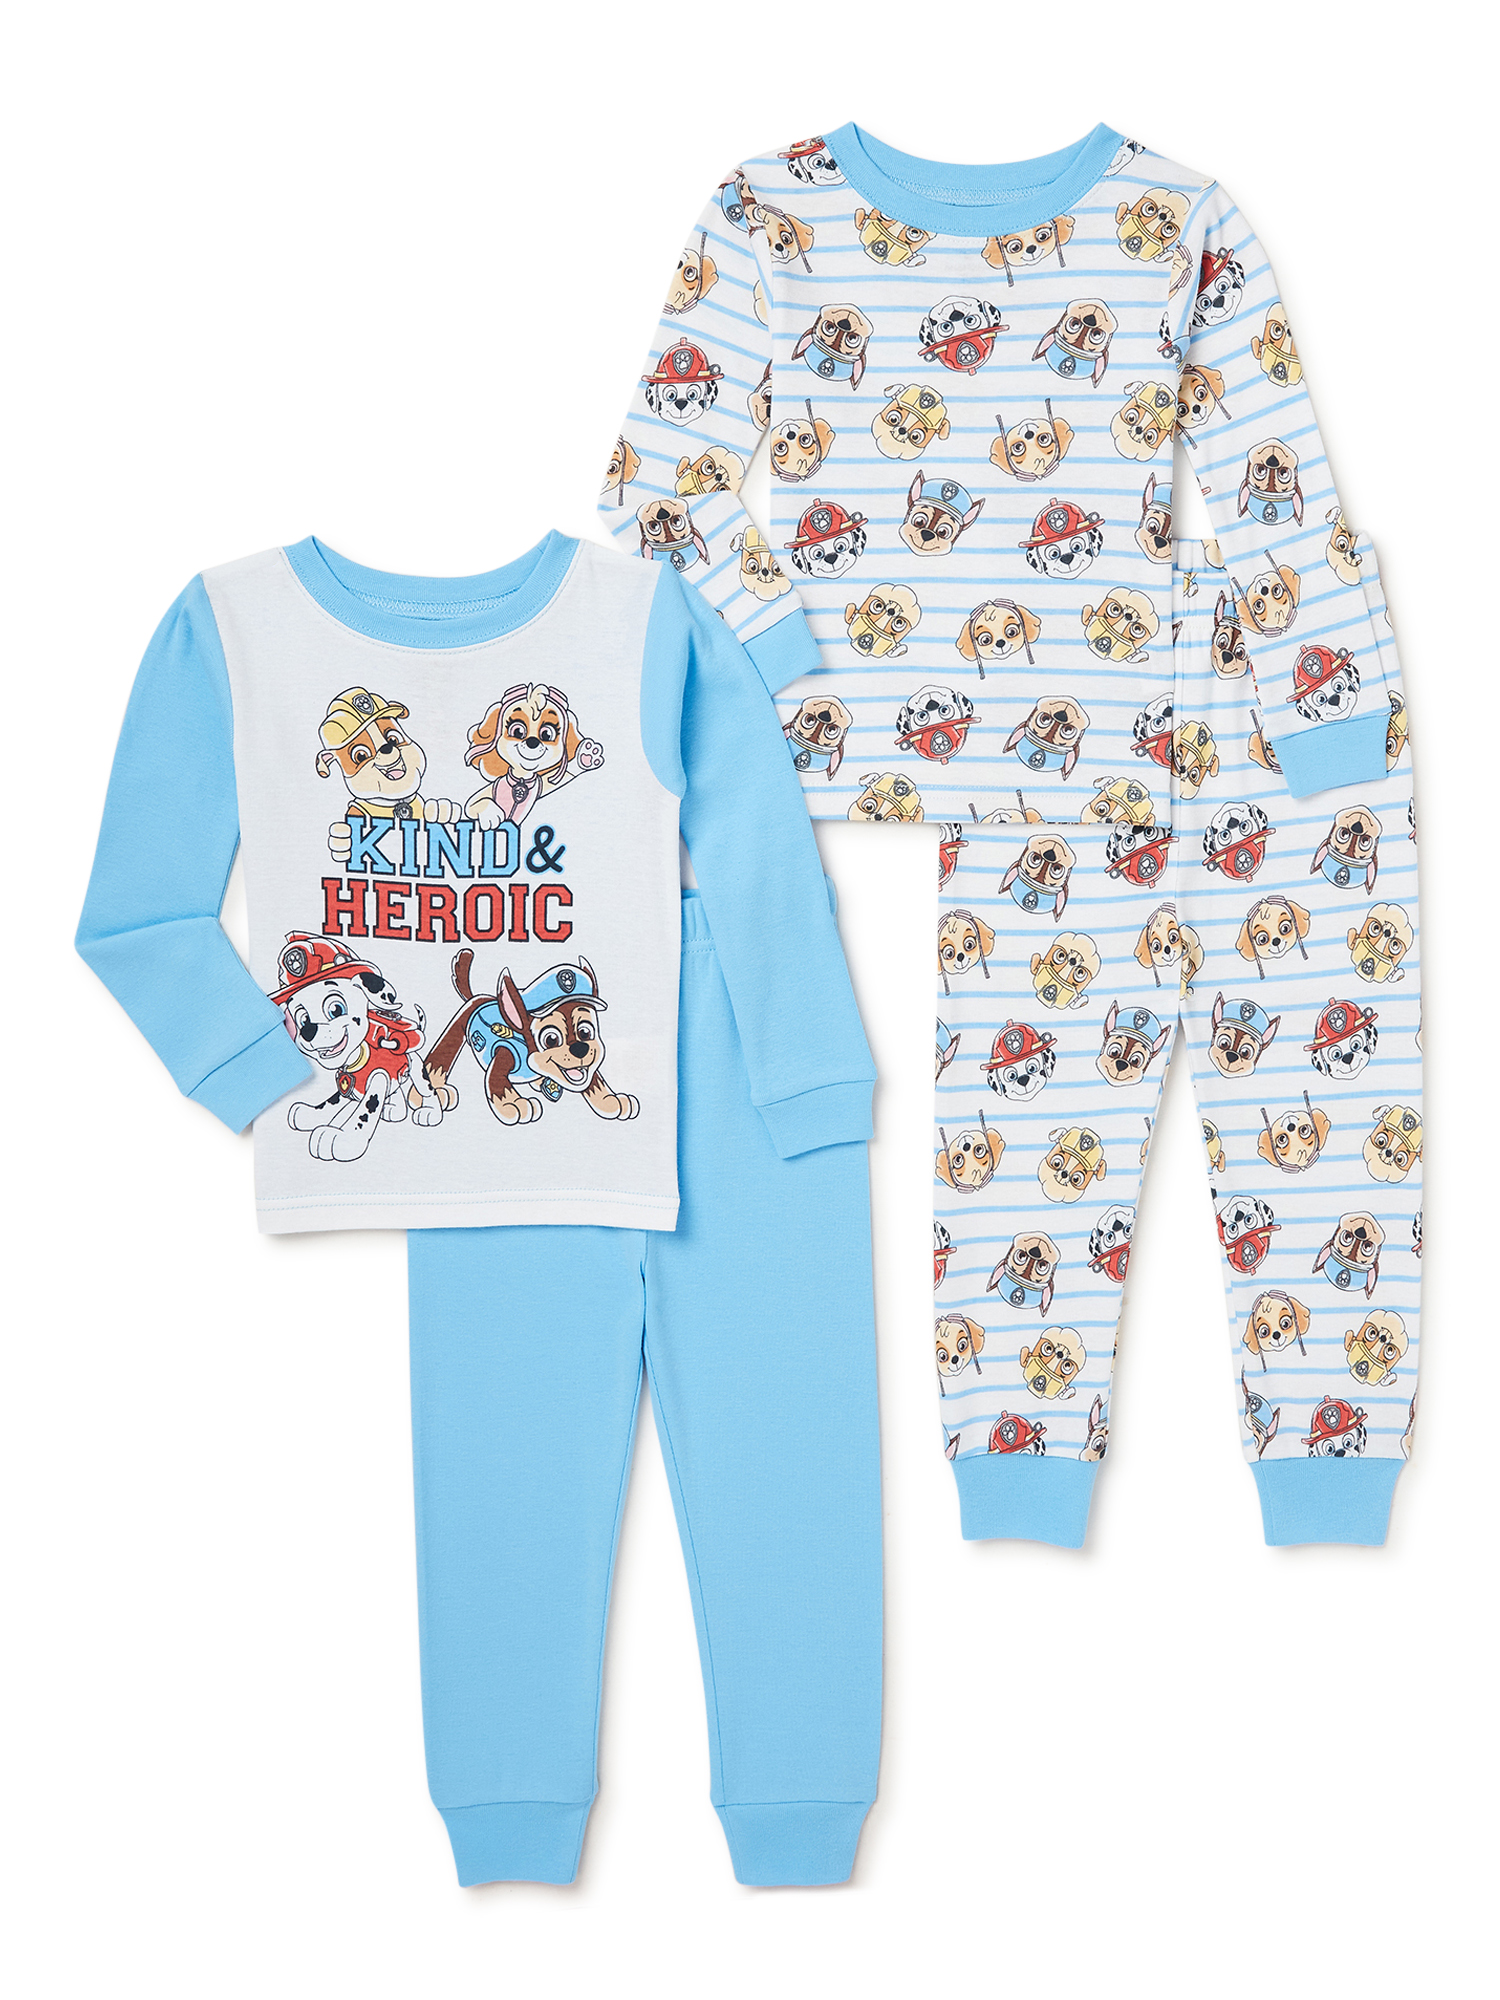 Paw Patrol Exclusive Toddler 4-Piece Cotton Pajama Set, Sizes 2T-5T - image 1 of 3